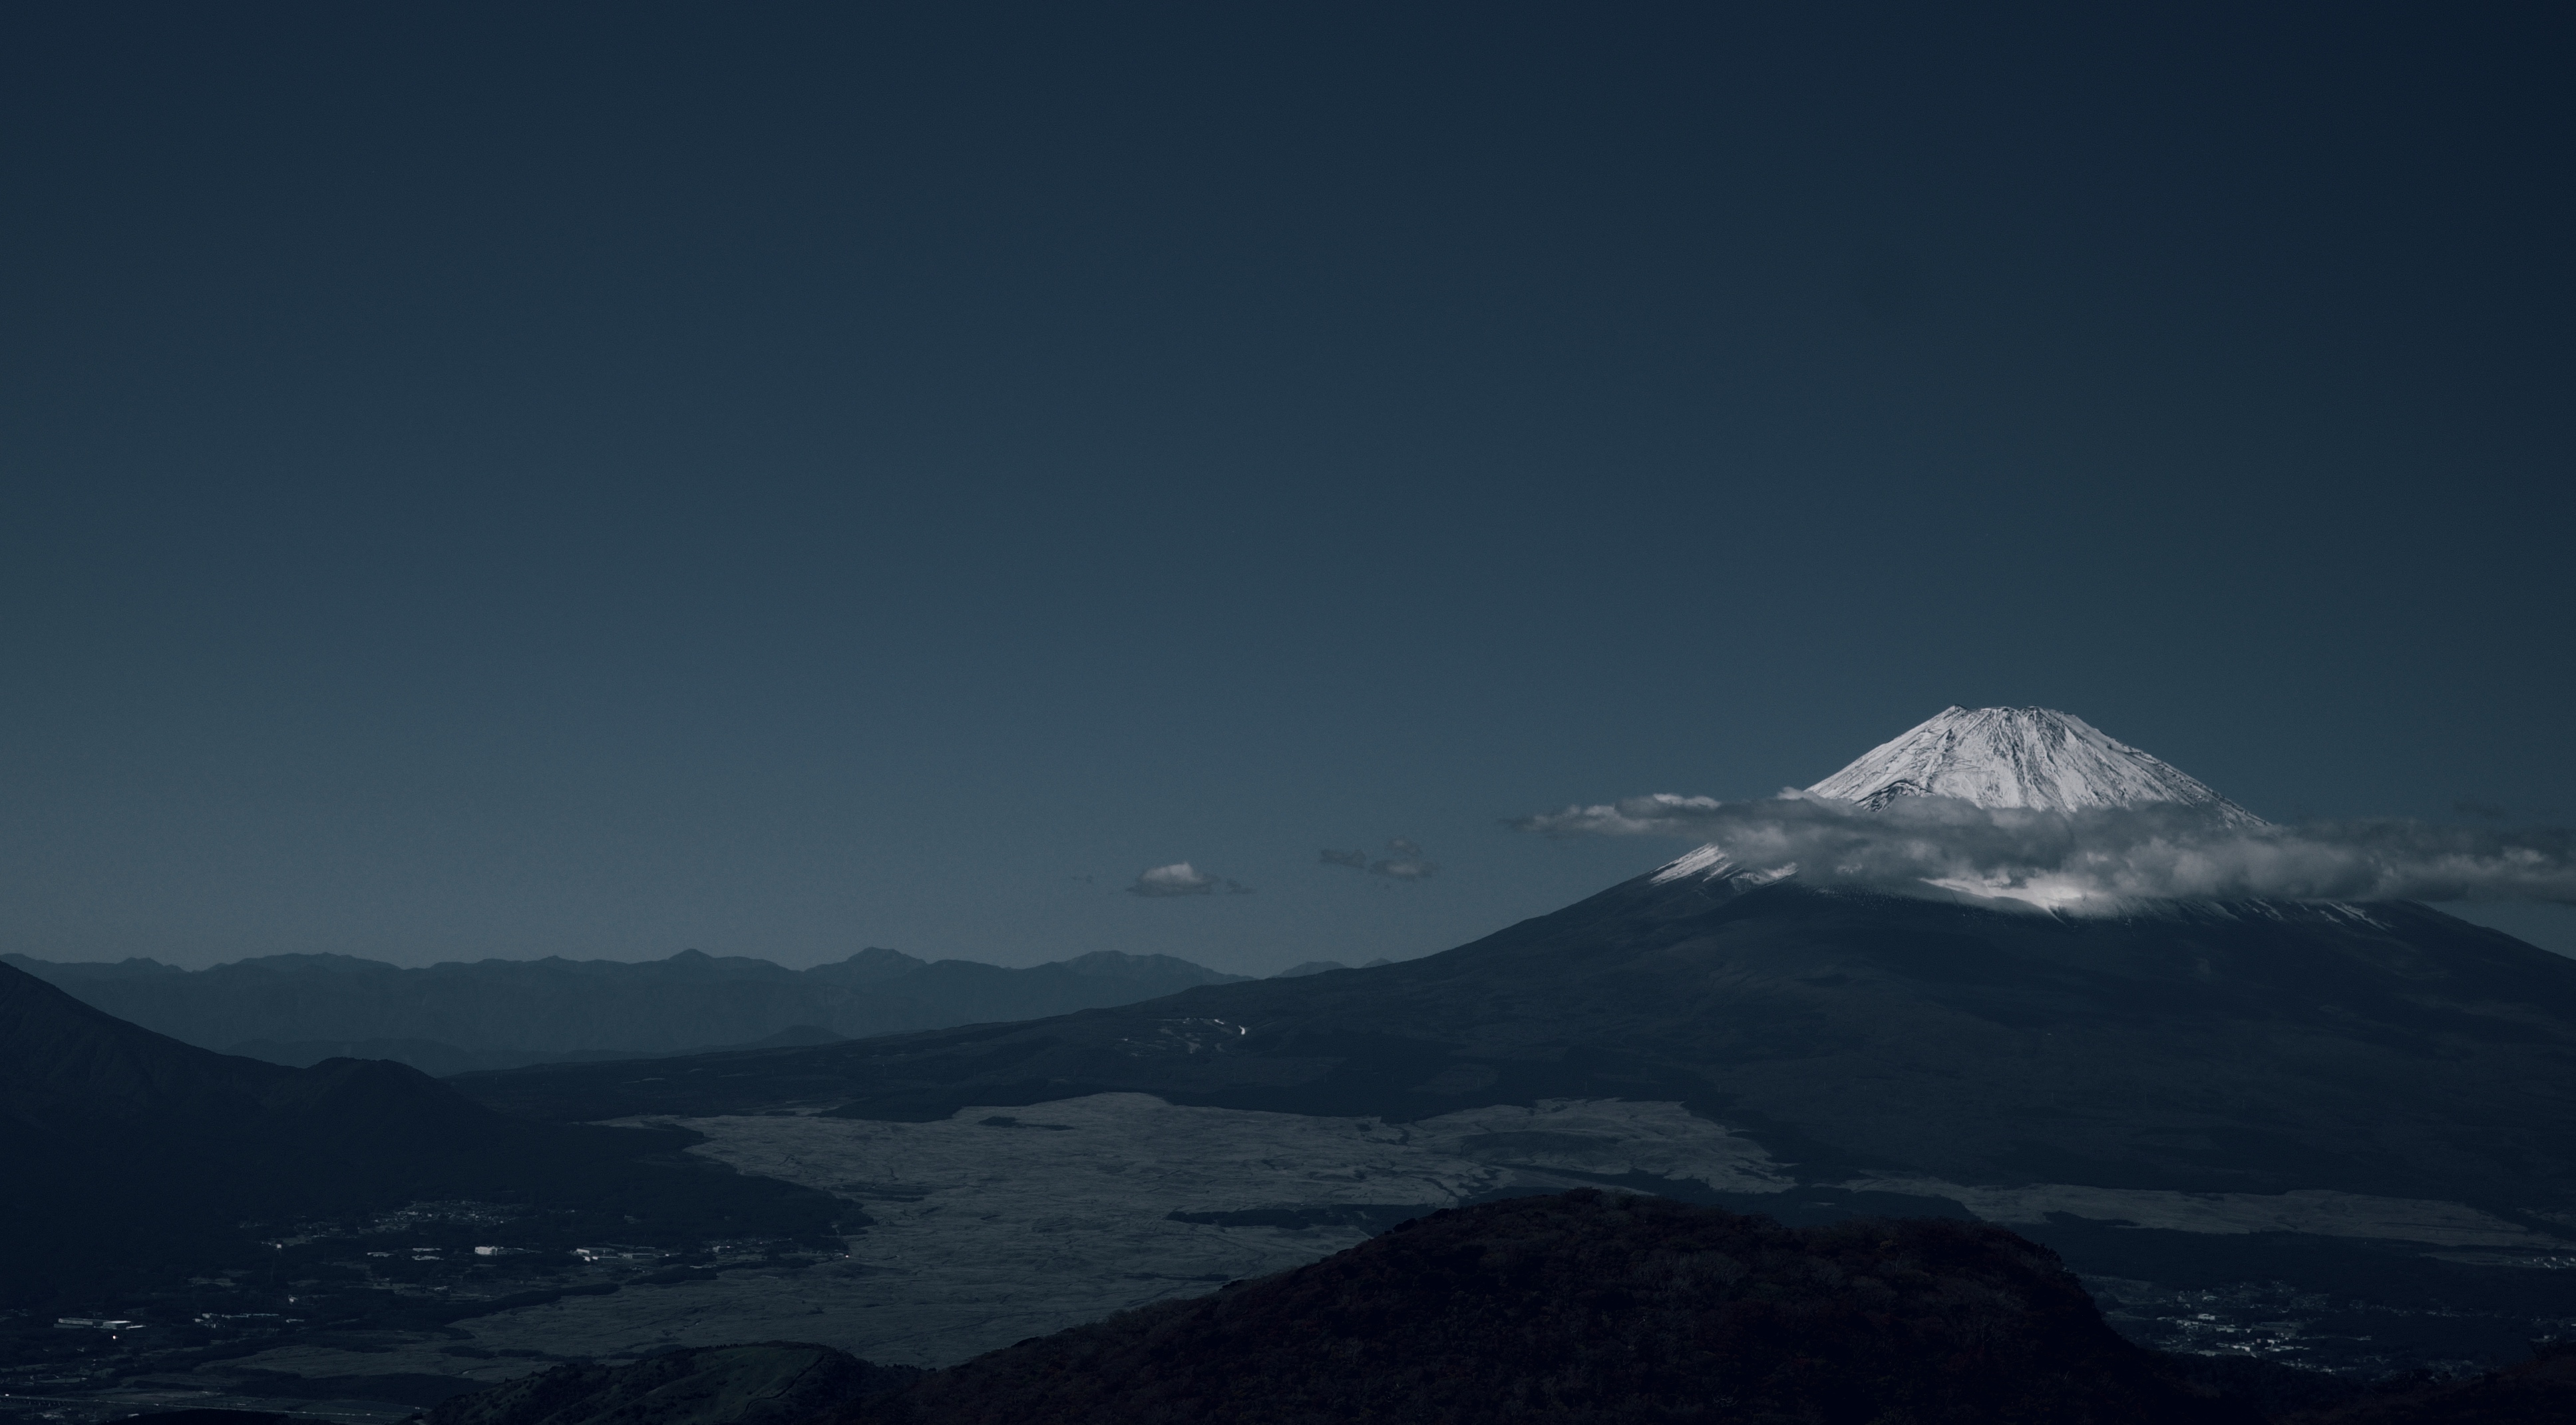 Undercover Mt. Fuji